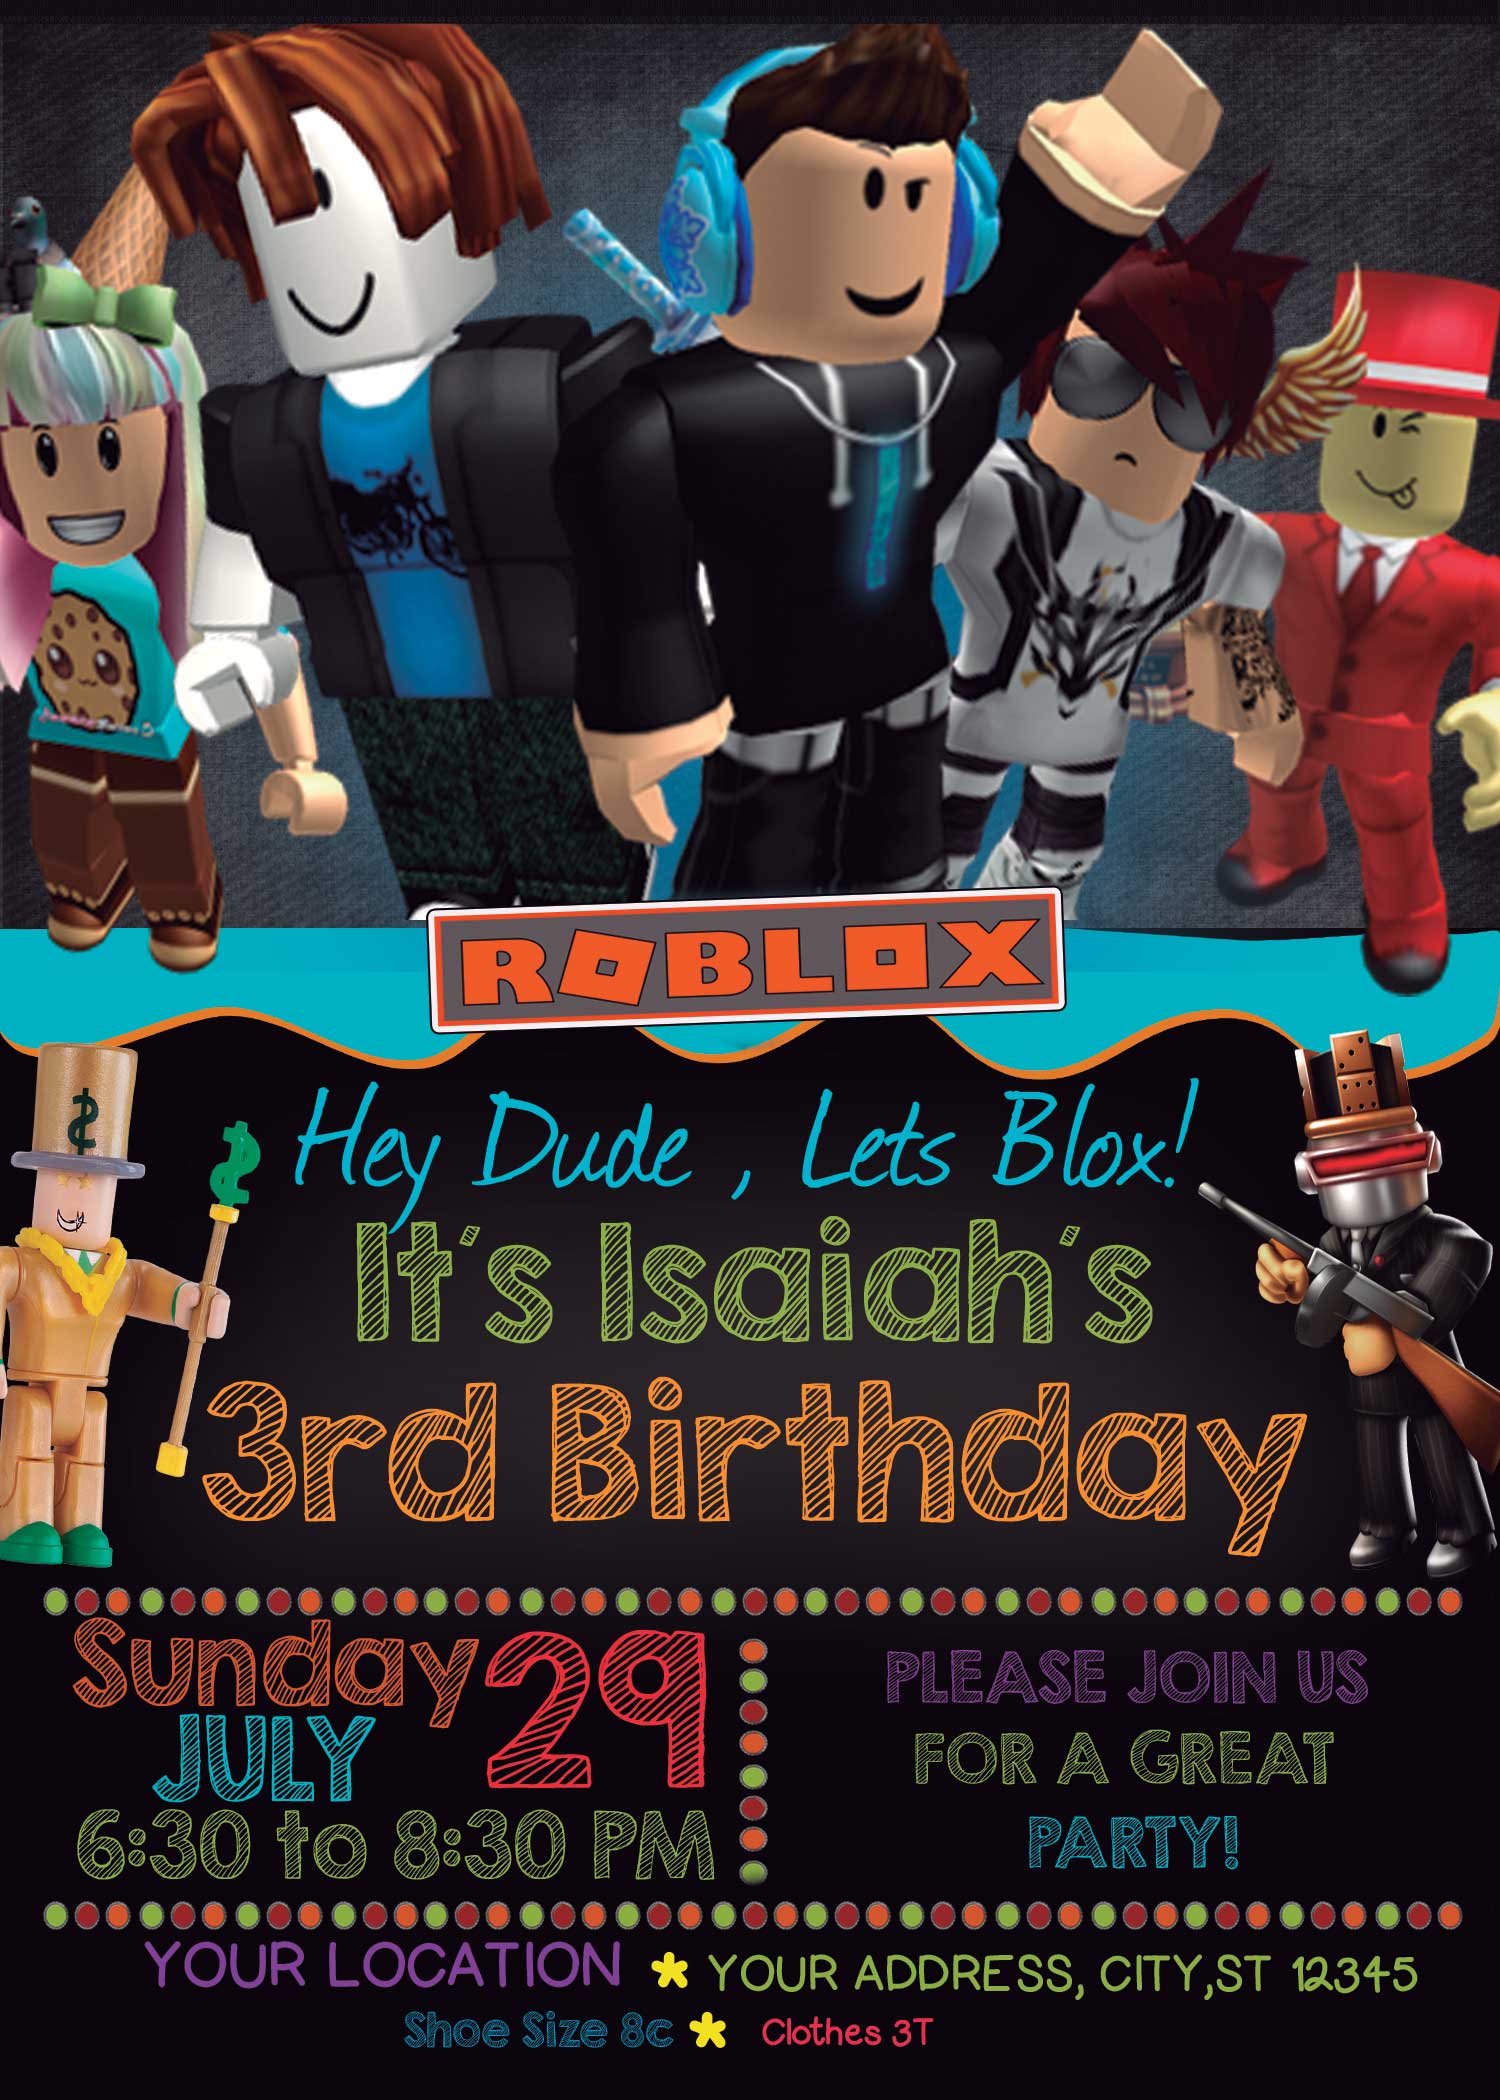 Roblox Birthday Invitation Amazing Party Invite - party city roblox birthday